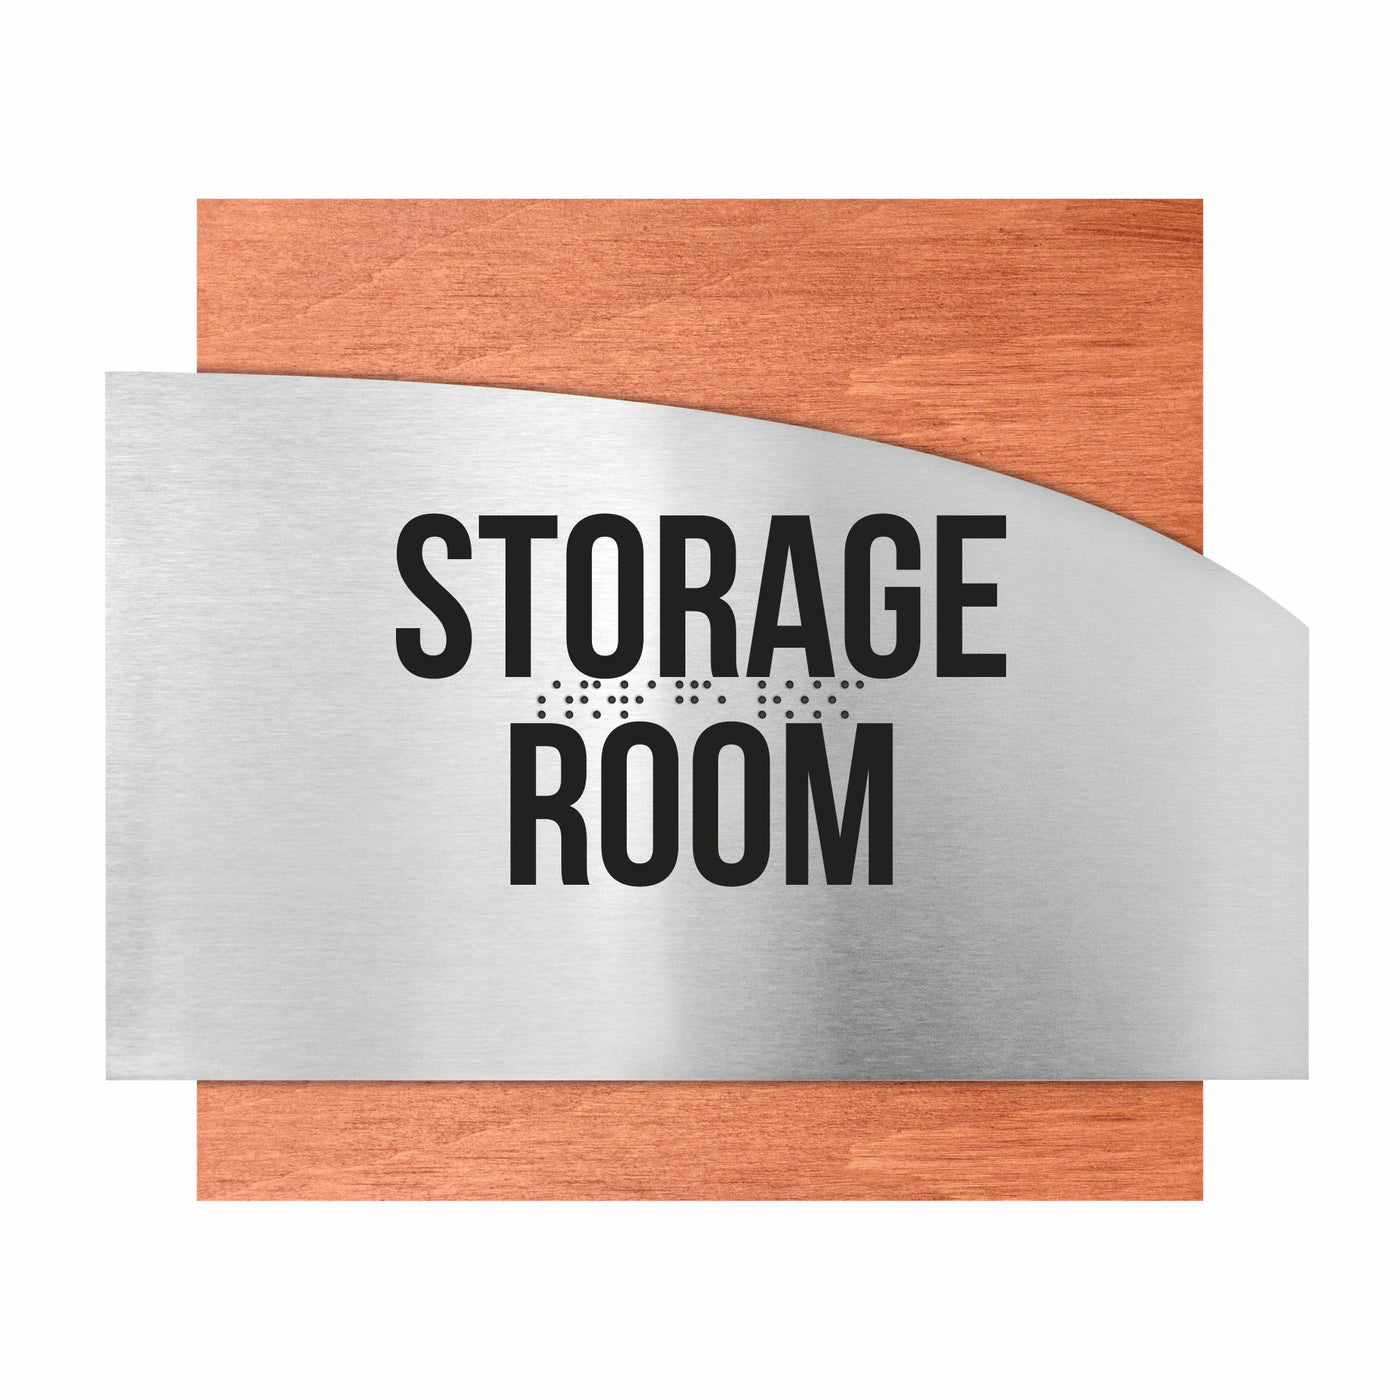 Door Signs - Storage Room Signs - Stainless Steel & Wood Plate - "Wave" Design